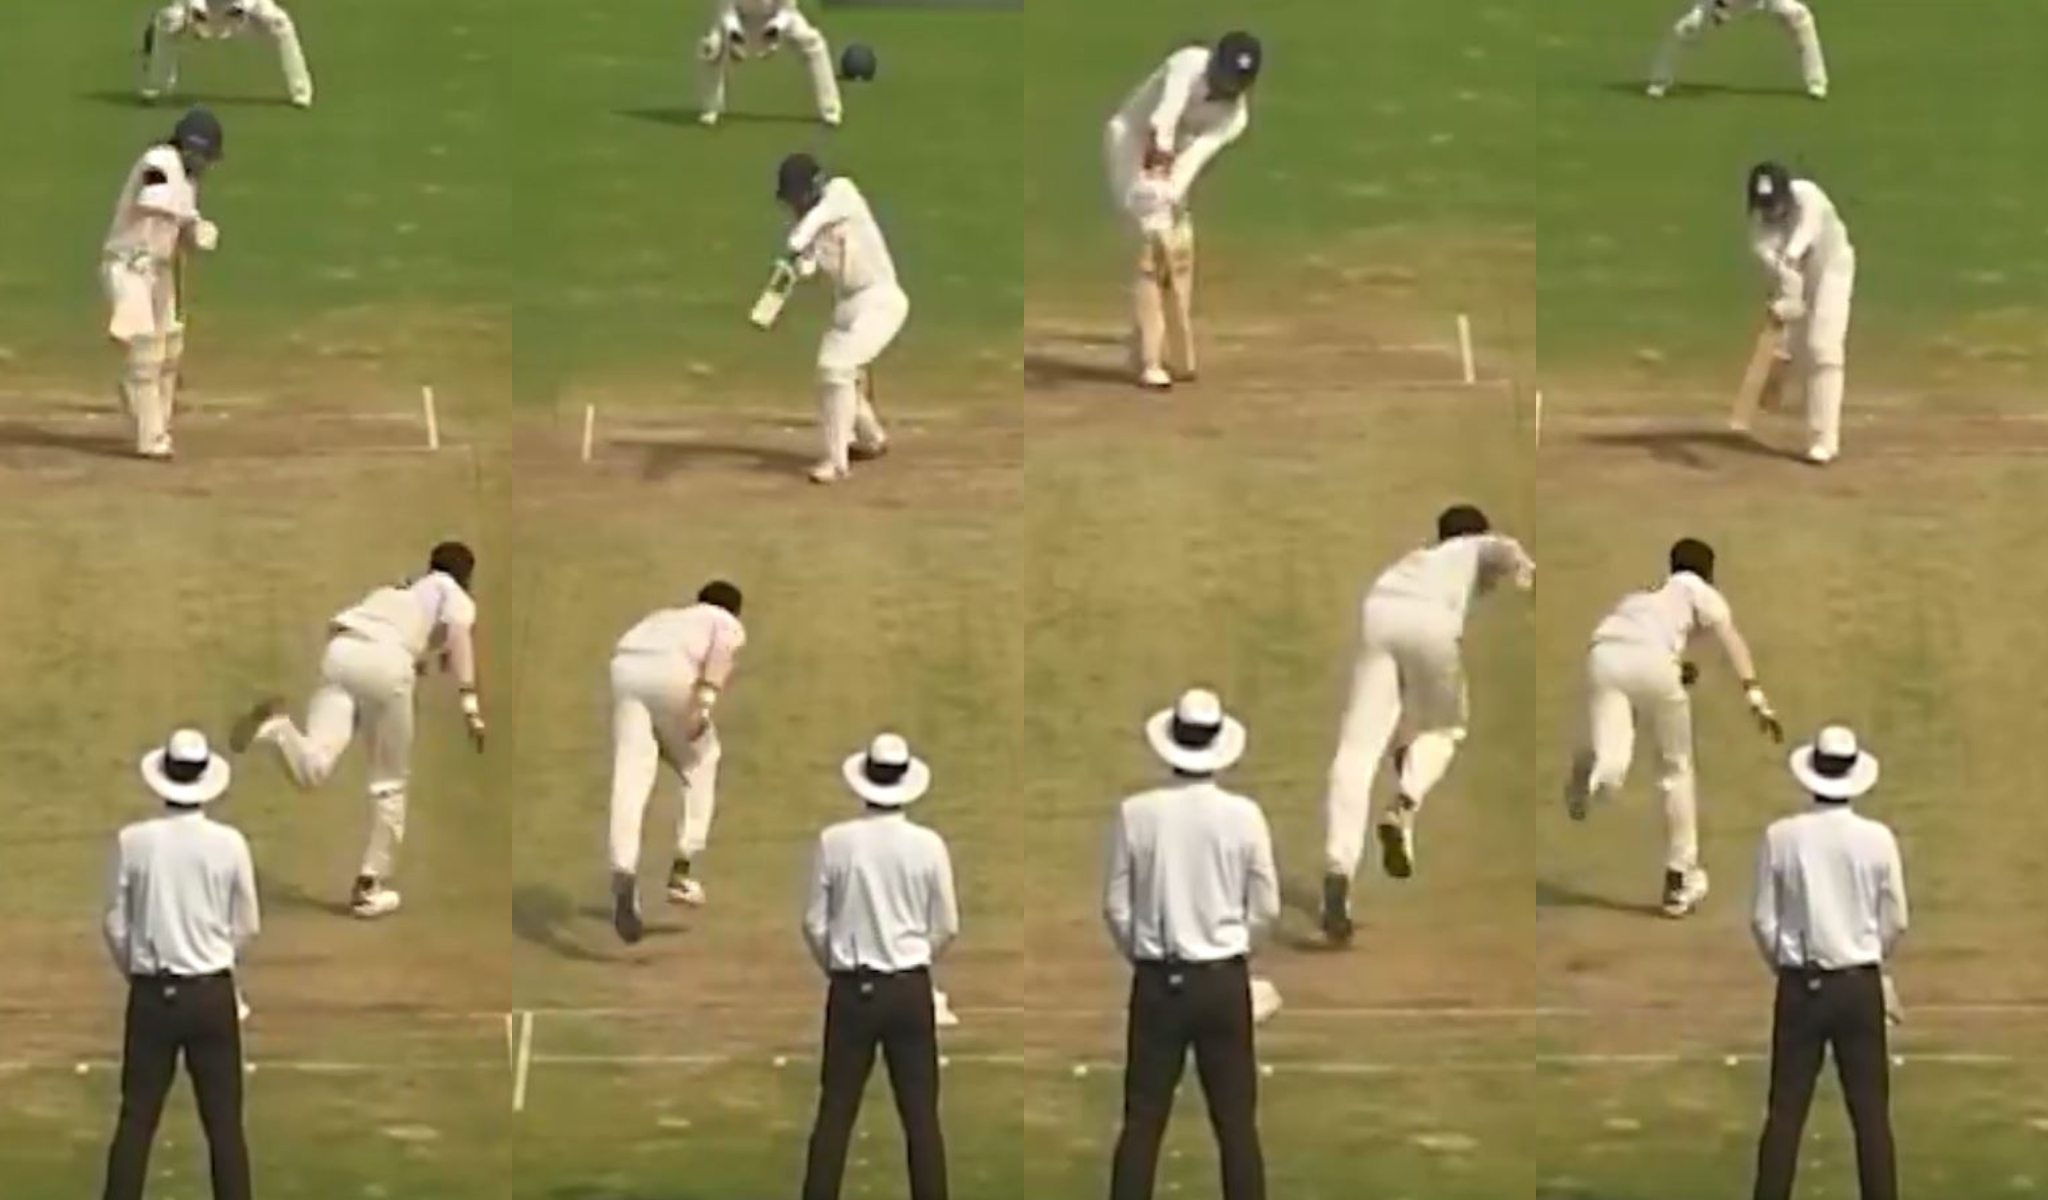 Kulwant Khejroliya's 4 wickets in 4 balls | BCCI domestic X Screengrab